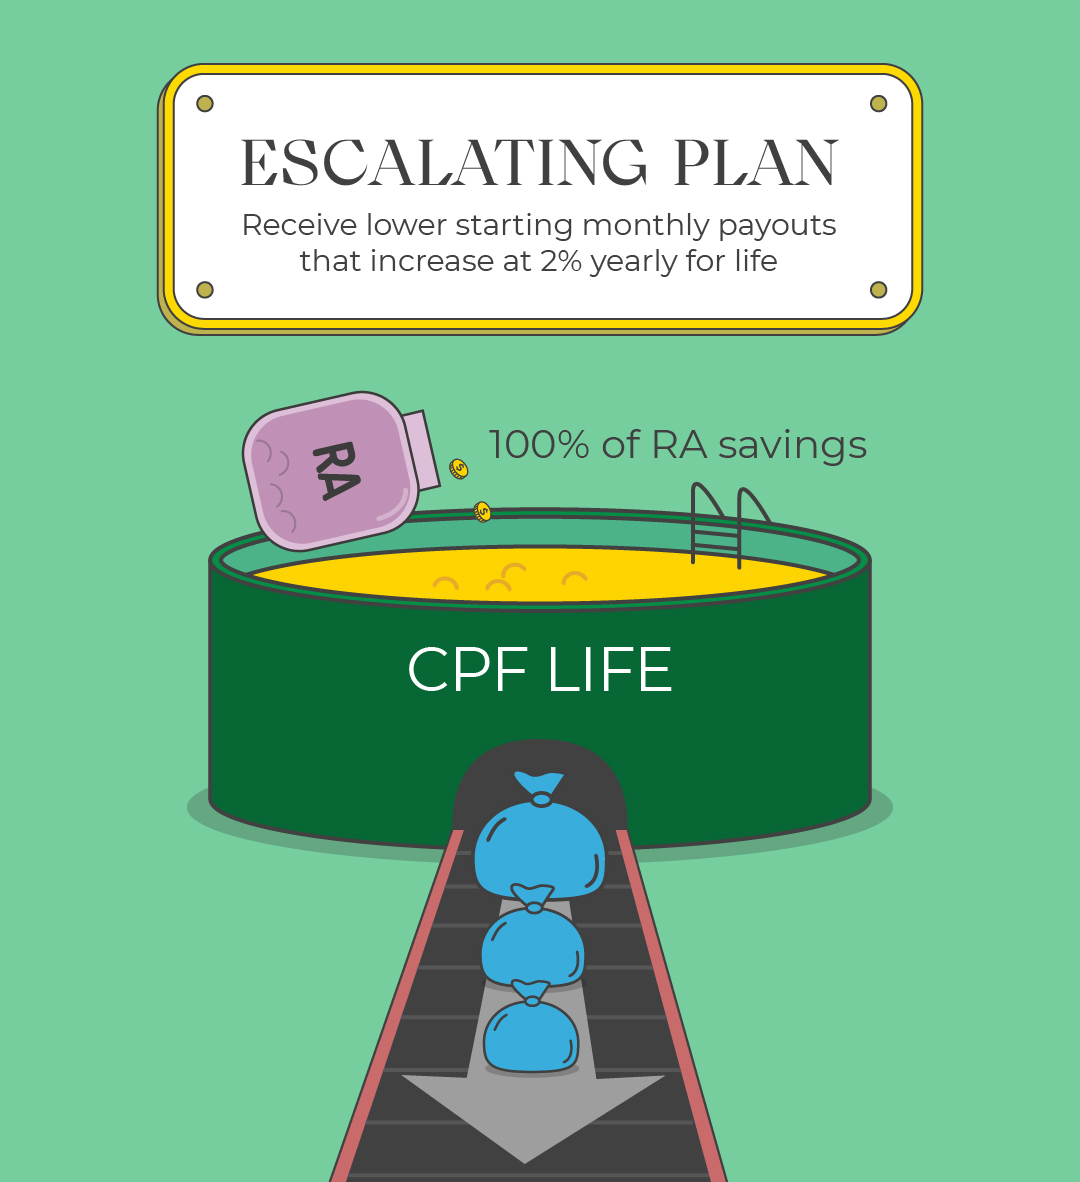 CPF LIFE Escalating Plan